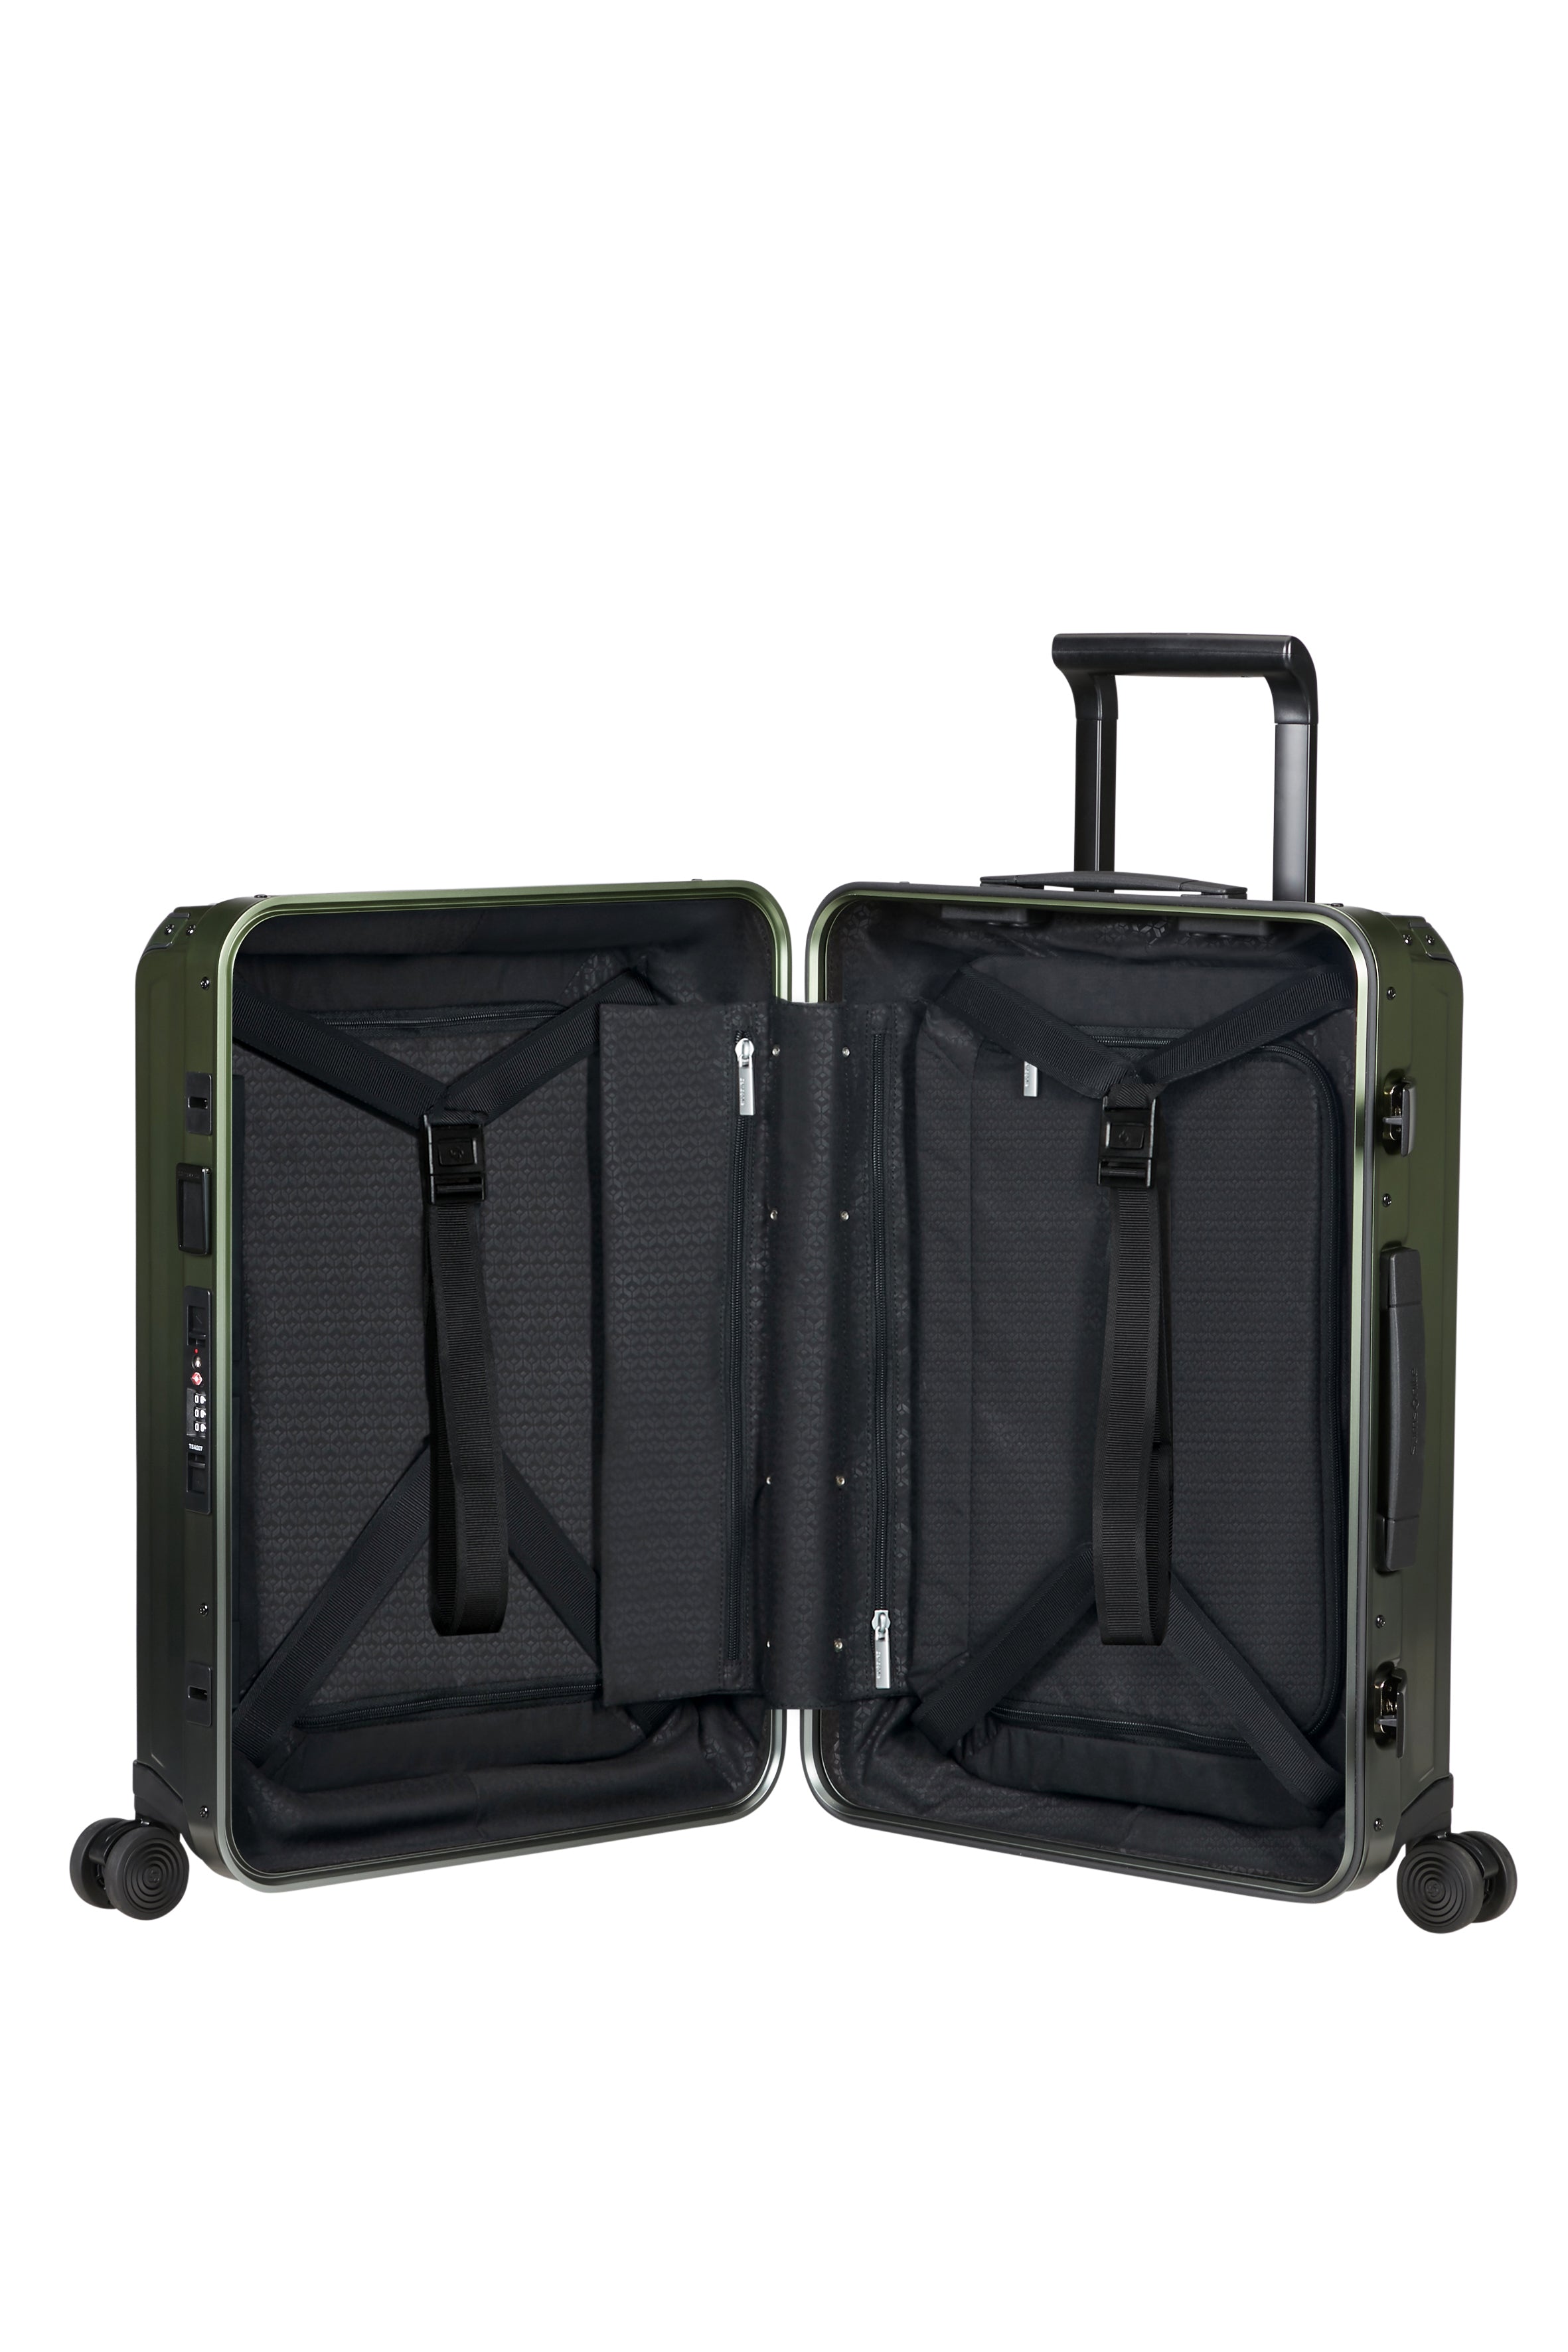 Samsonite - Lite Box ALU 55cm Small 4 Wheel Hard Suitcase - Gradient Green - 0